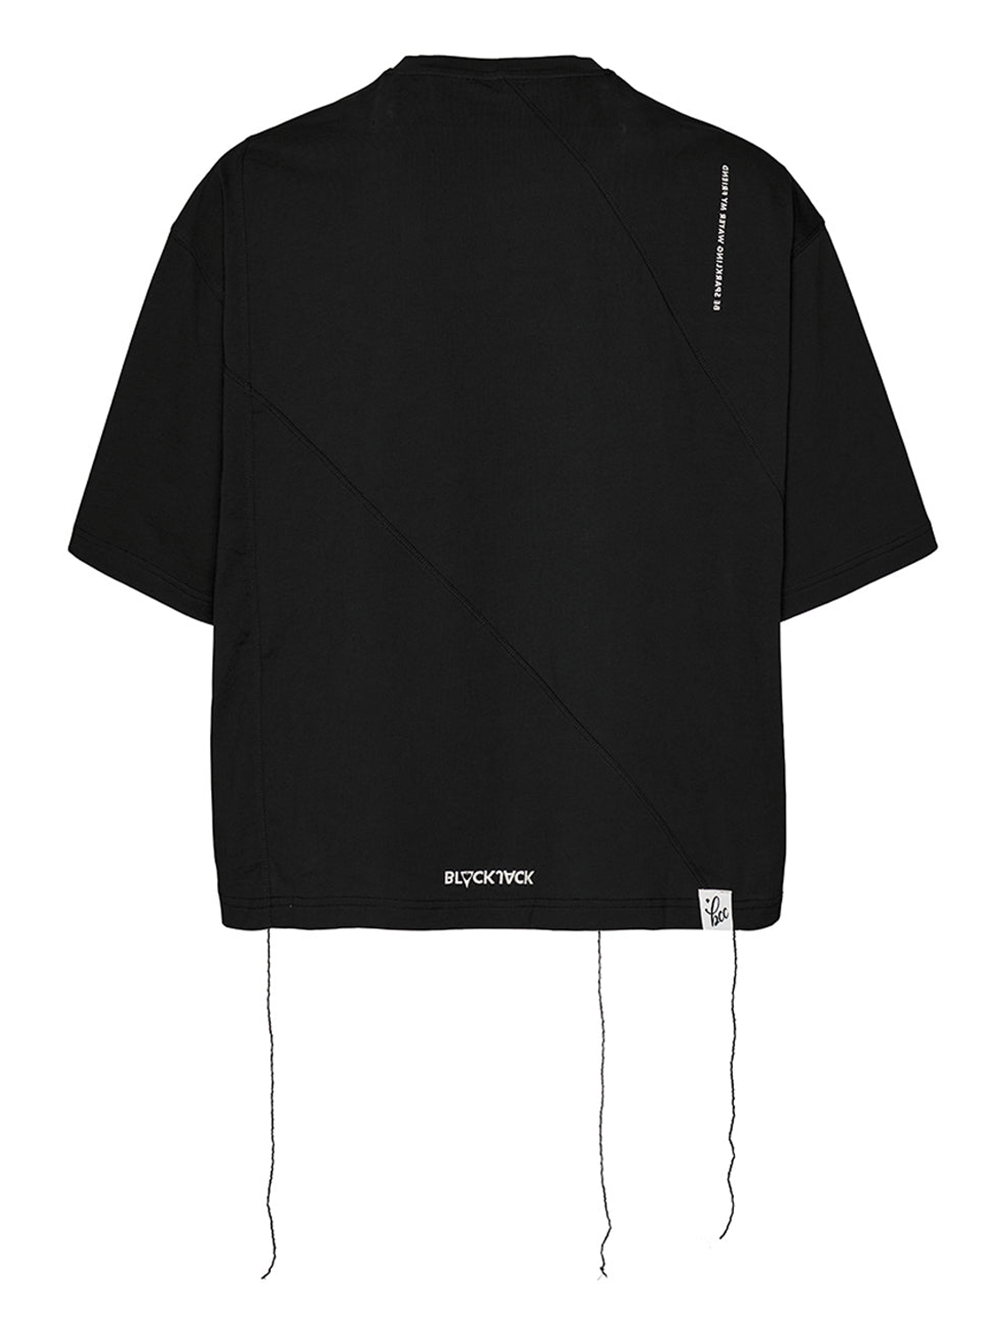 BLACKJACK-Box-Patchwork-Unisex-T-Shirt-Black-2